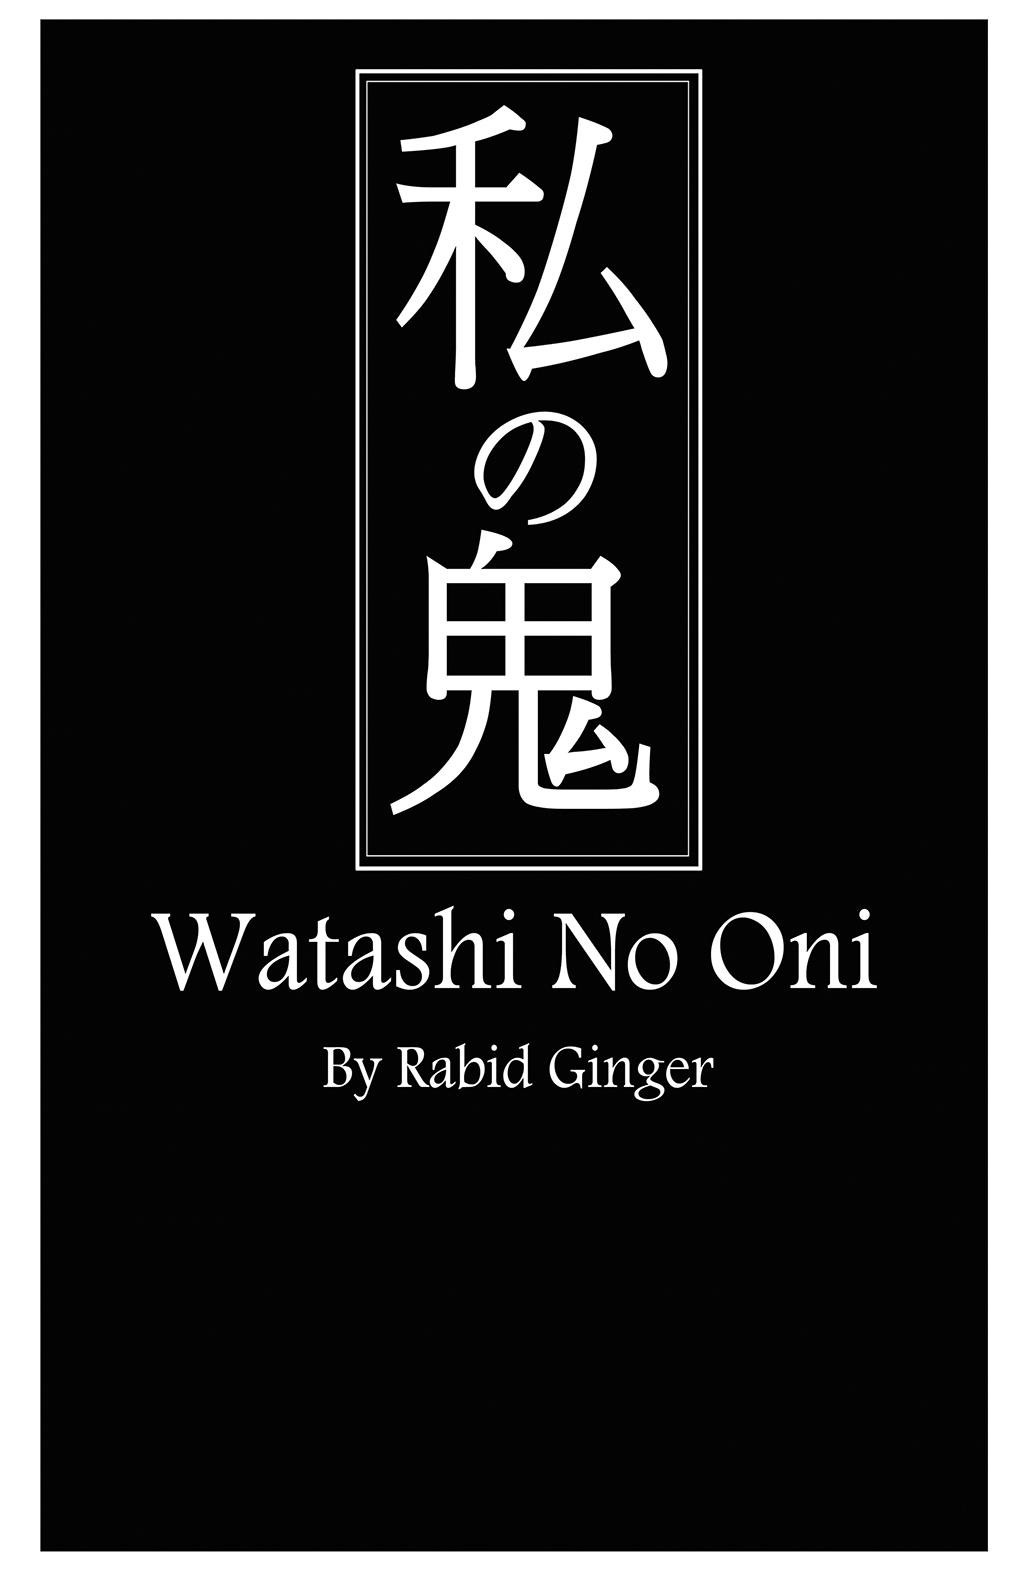 Watashi No Oni Issue 0 Title page